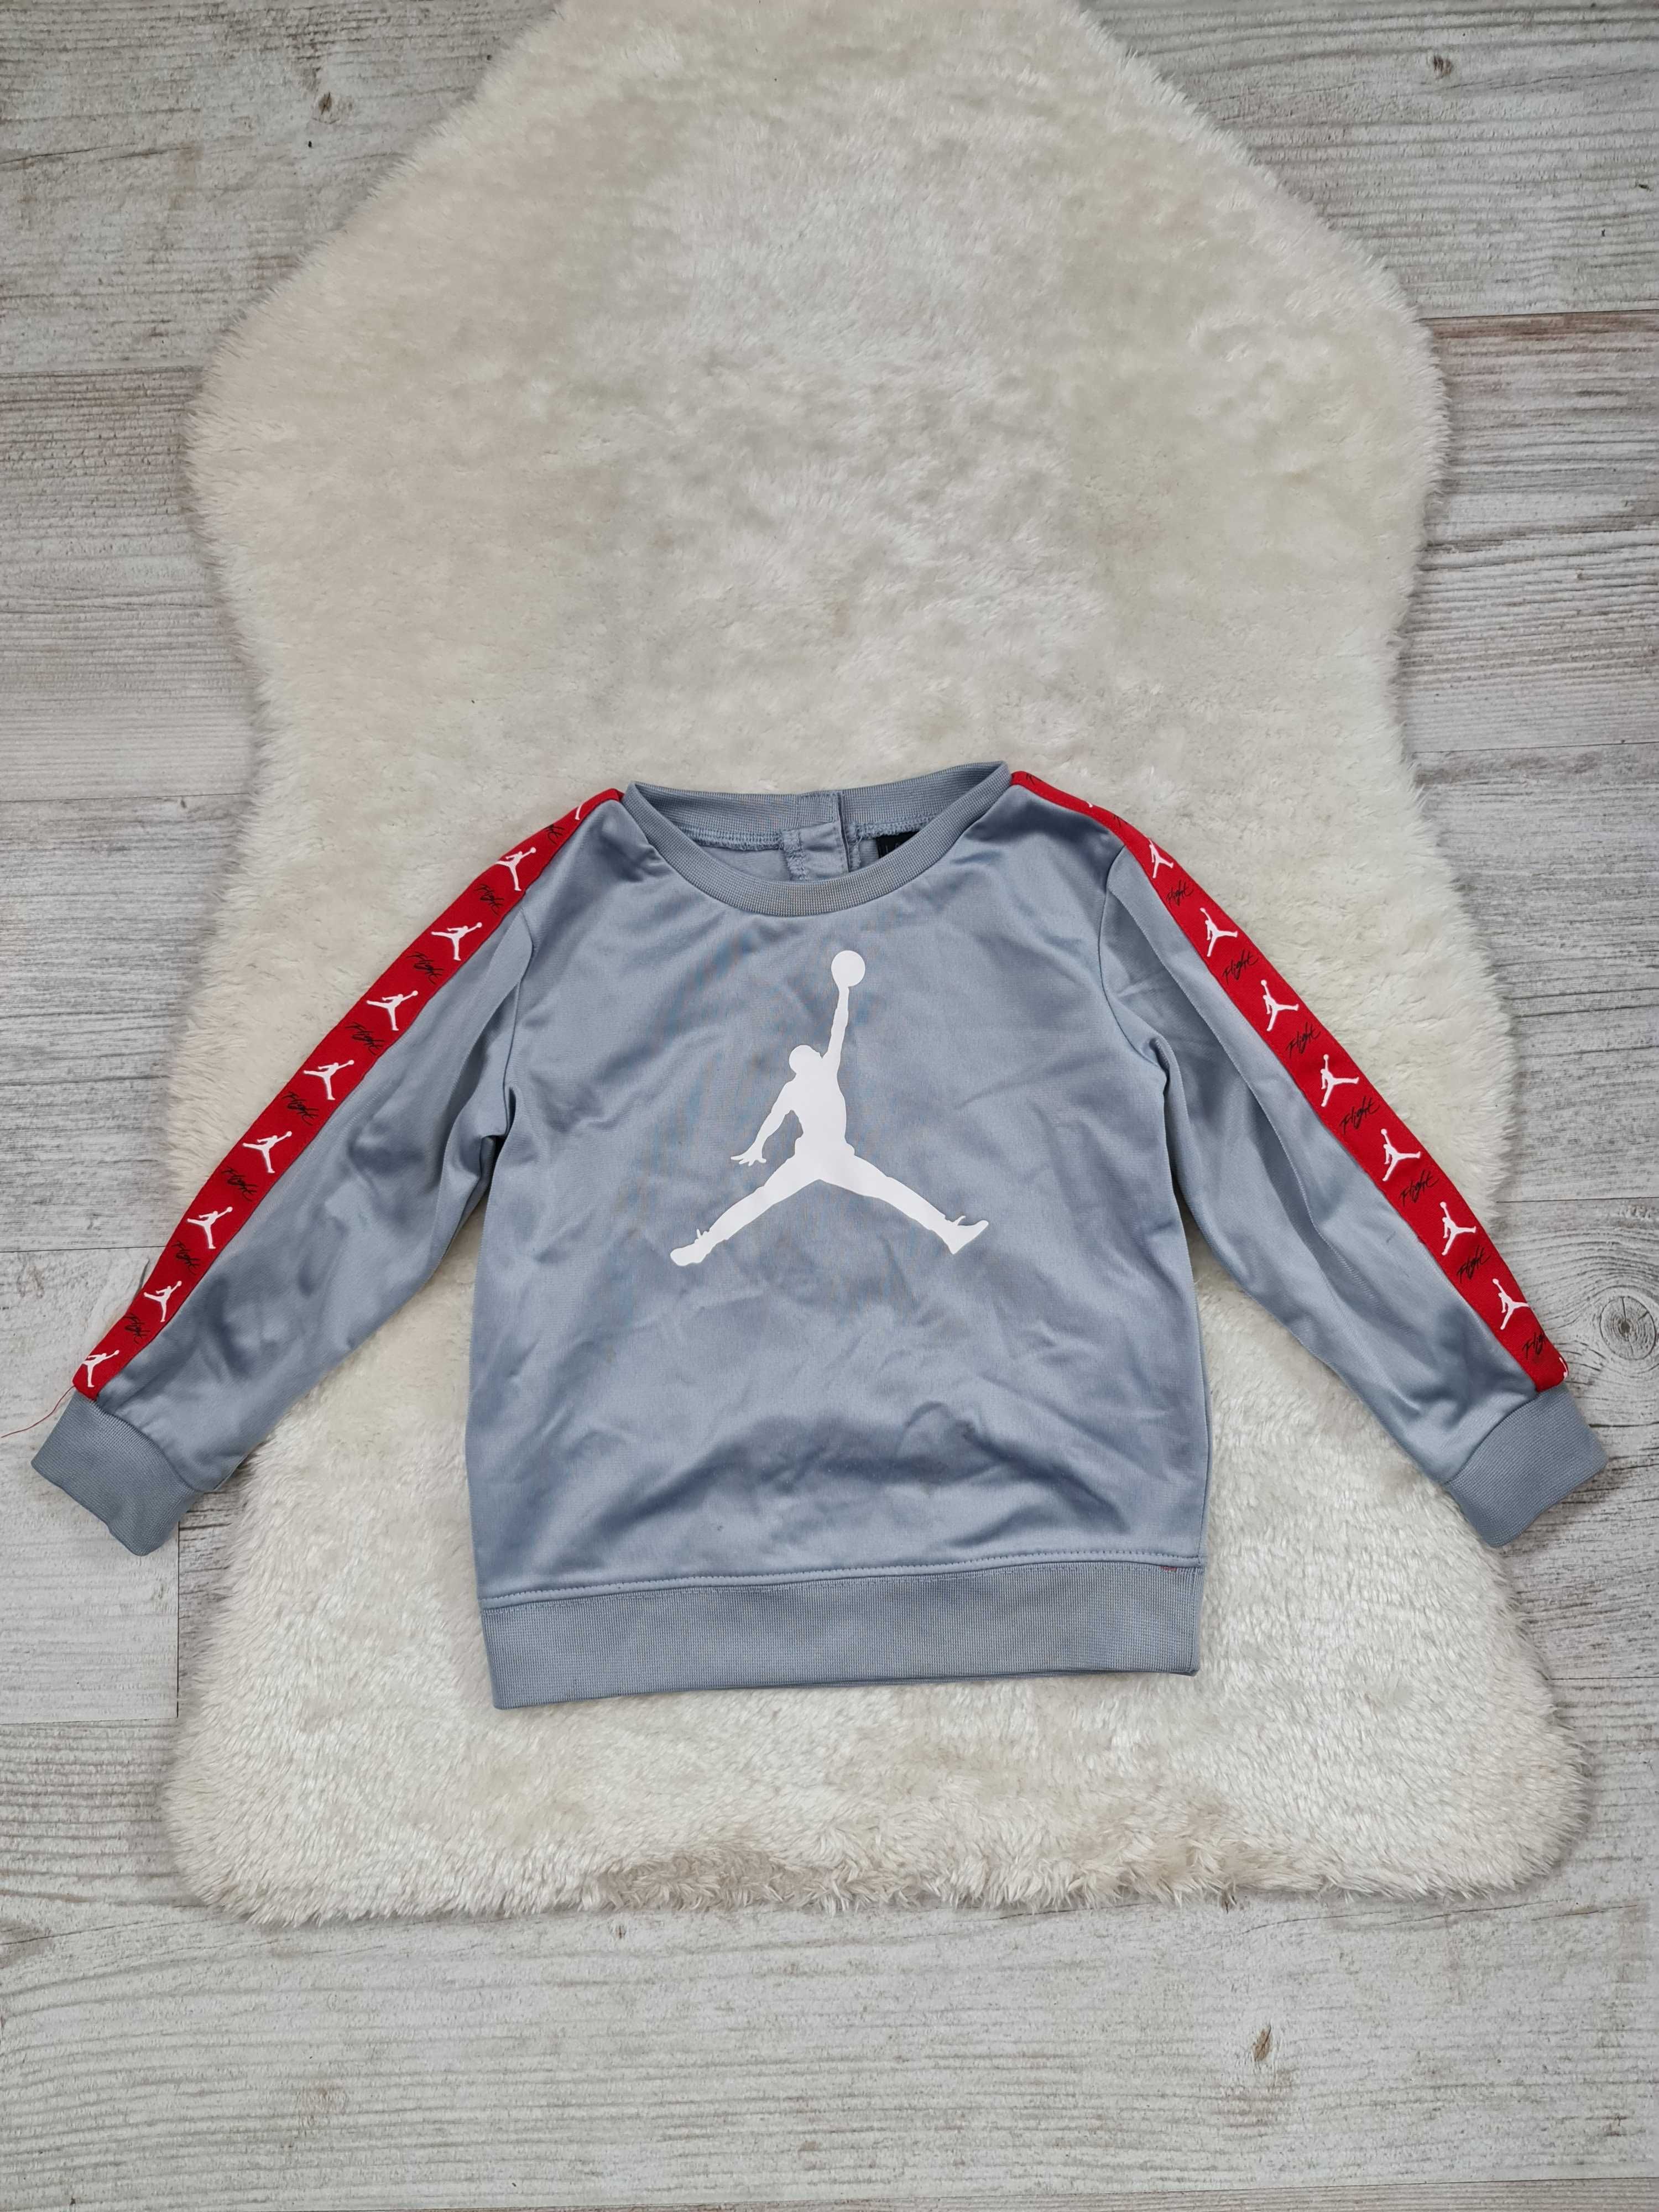 Bluza Nike Air Jordan Swoosh Rozmiar 86 - 92 Szara Logo